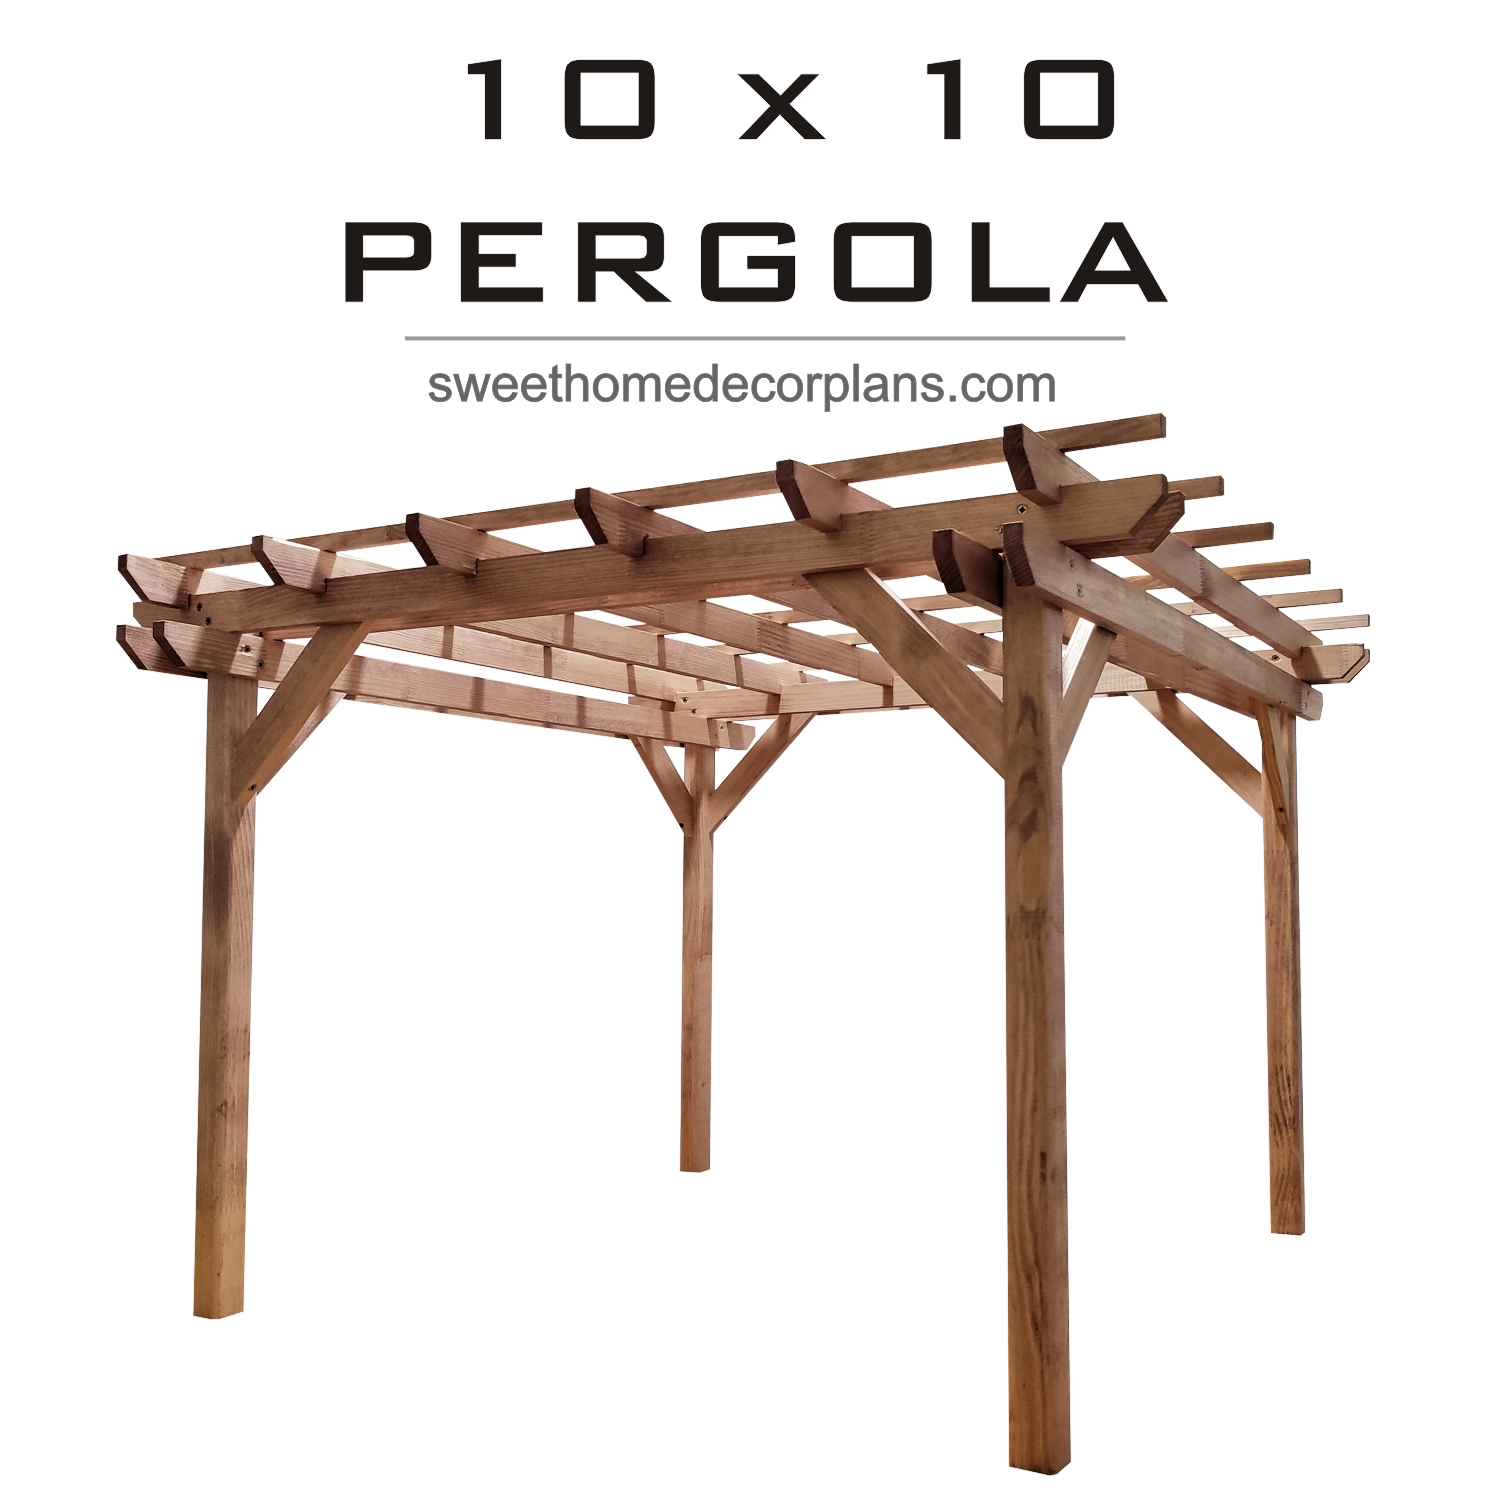 Diy-wooden-10-x-10-pergola-plans-for-backyard